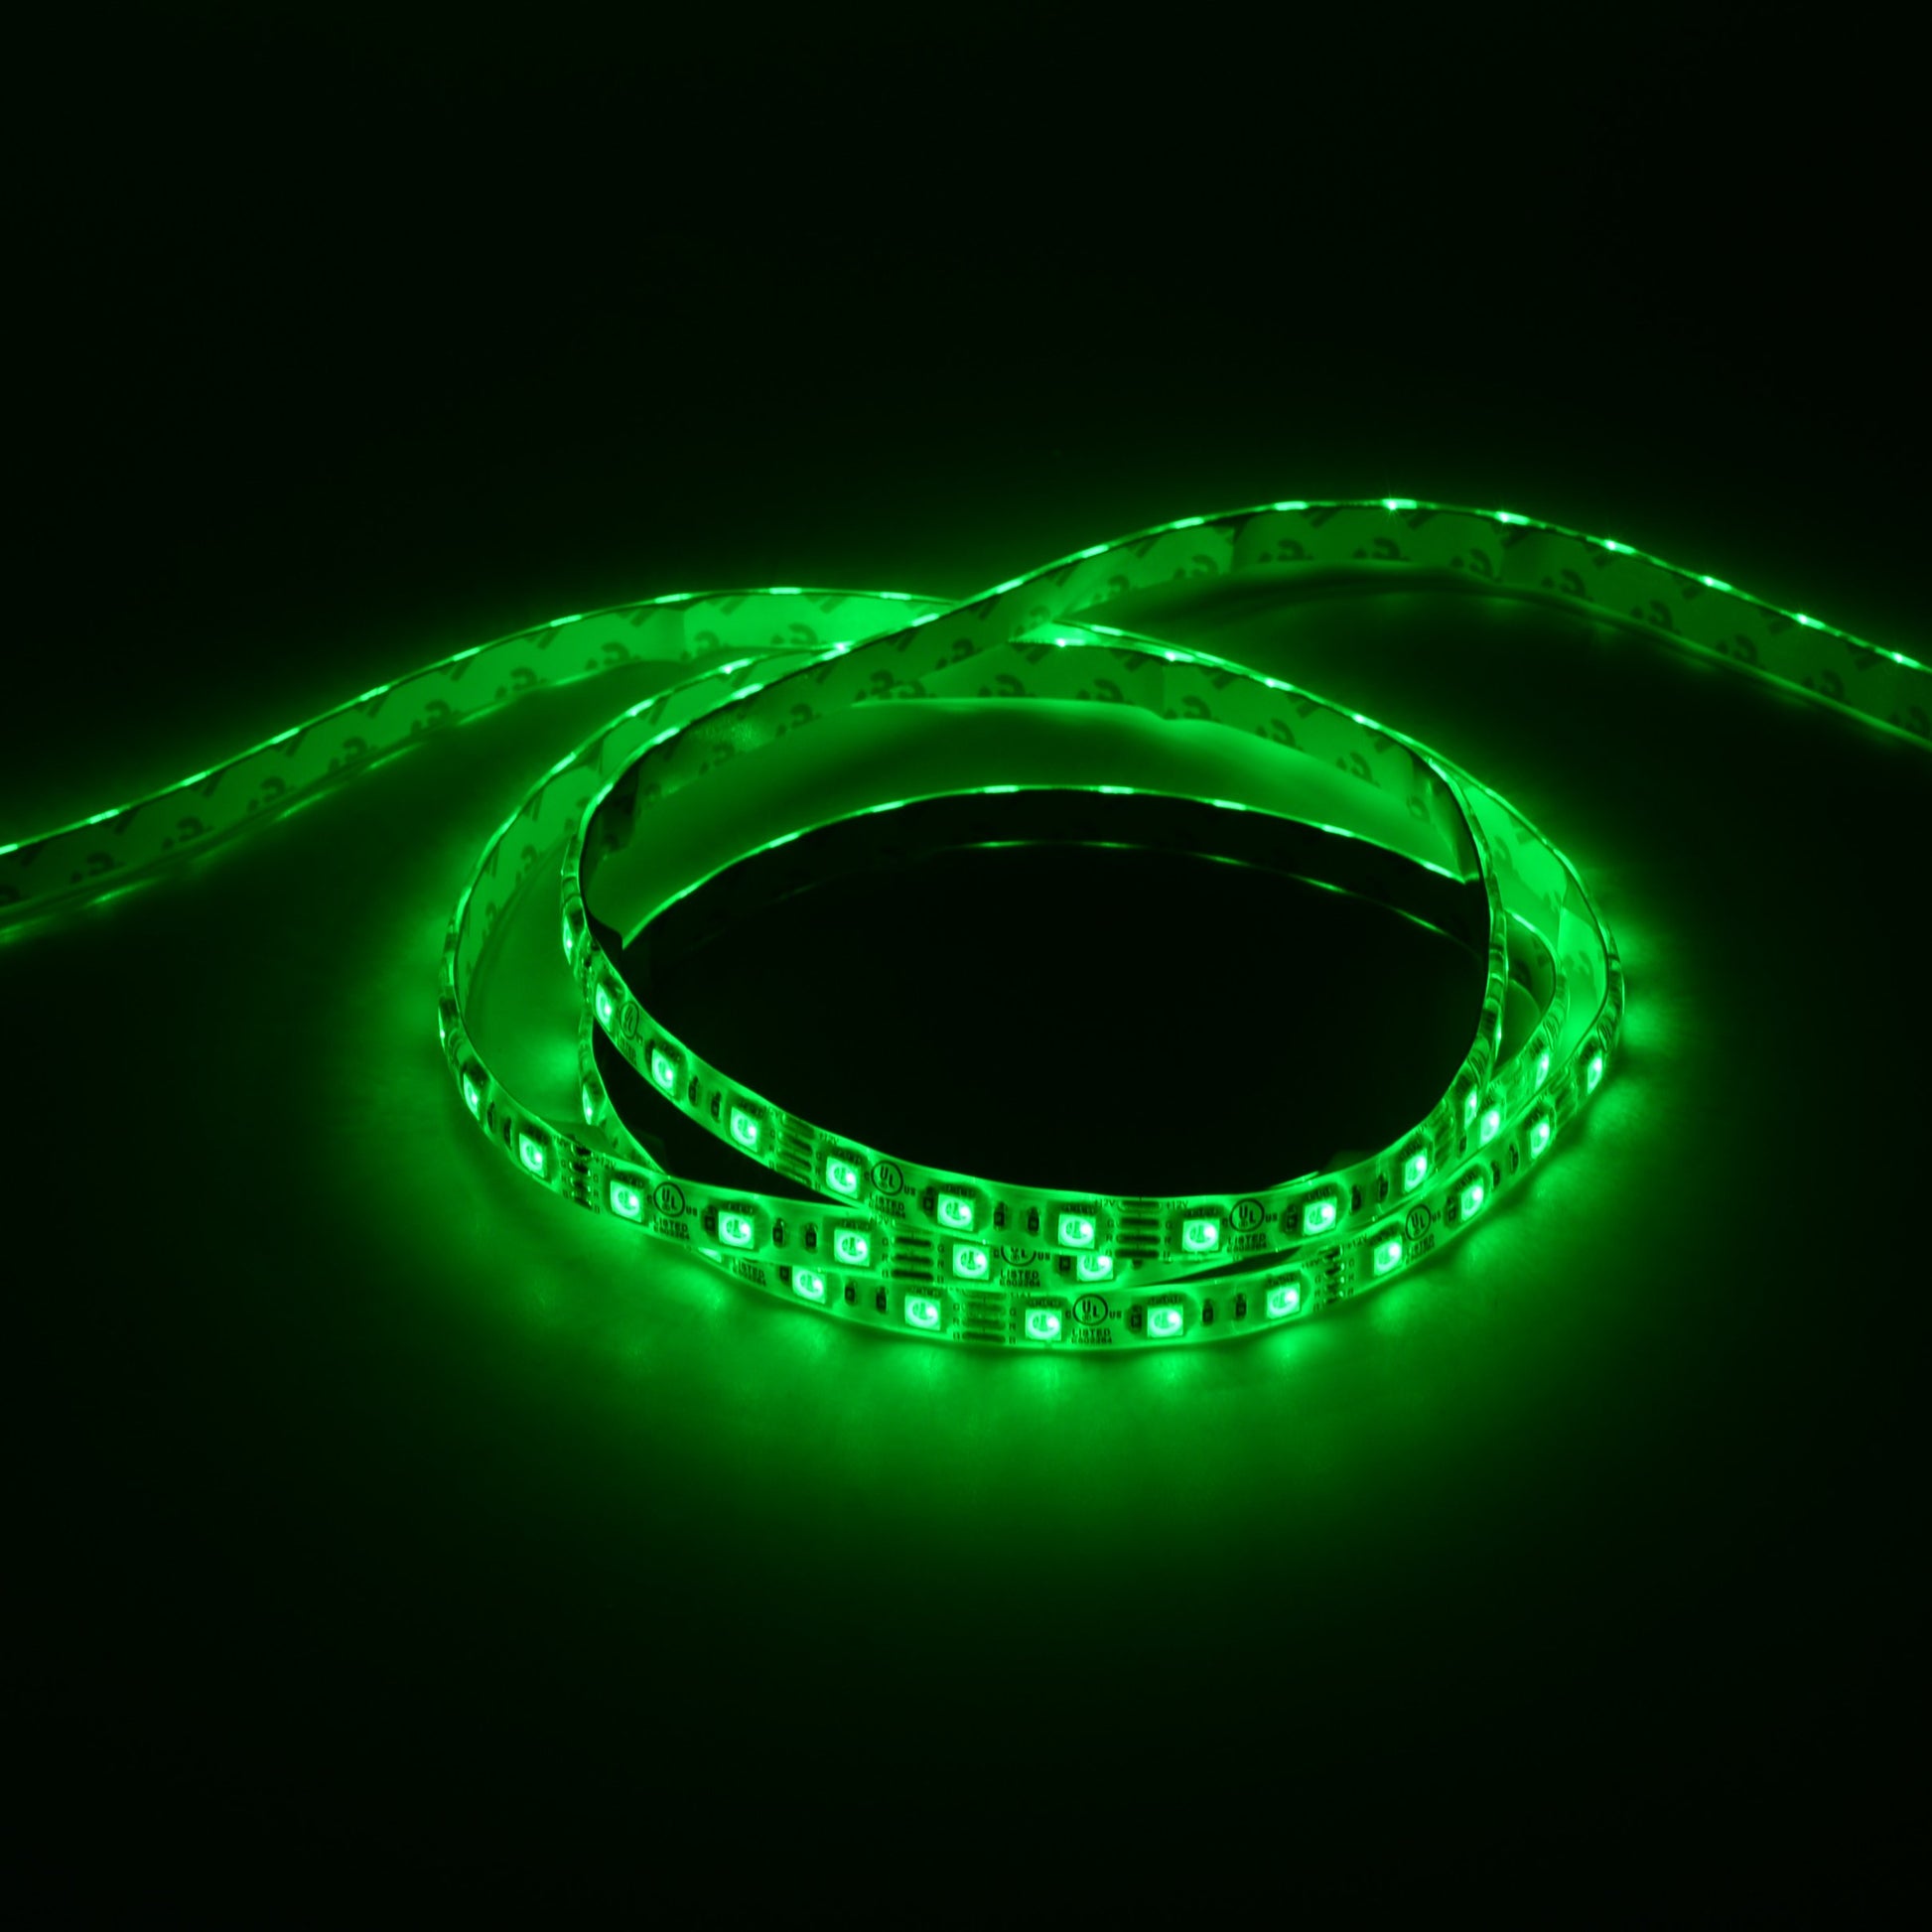 RGB AC Plug-in LED Strip Lights